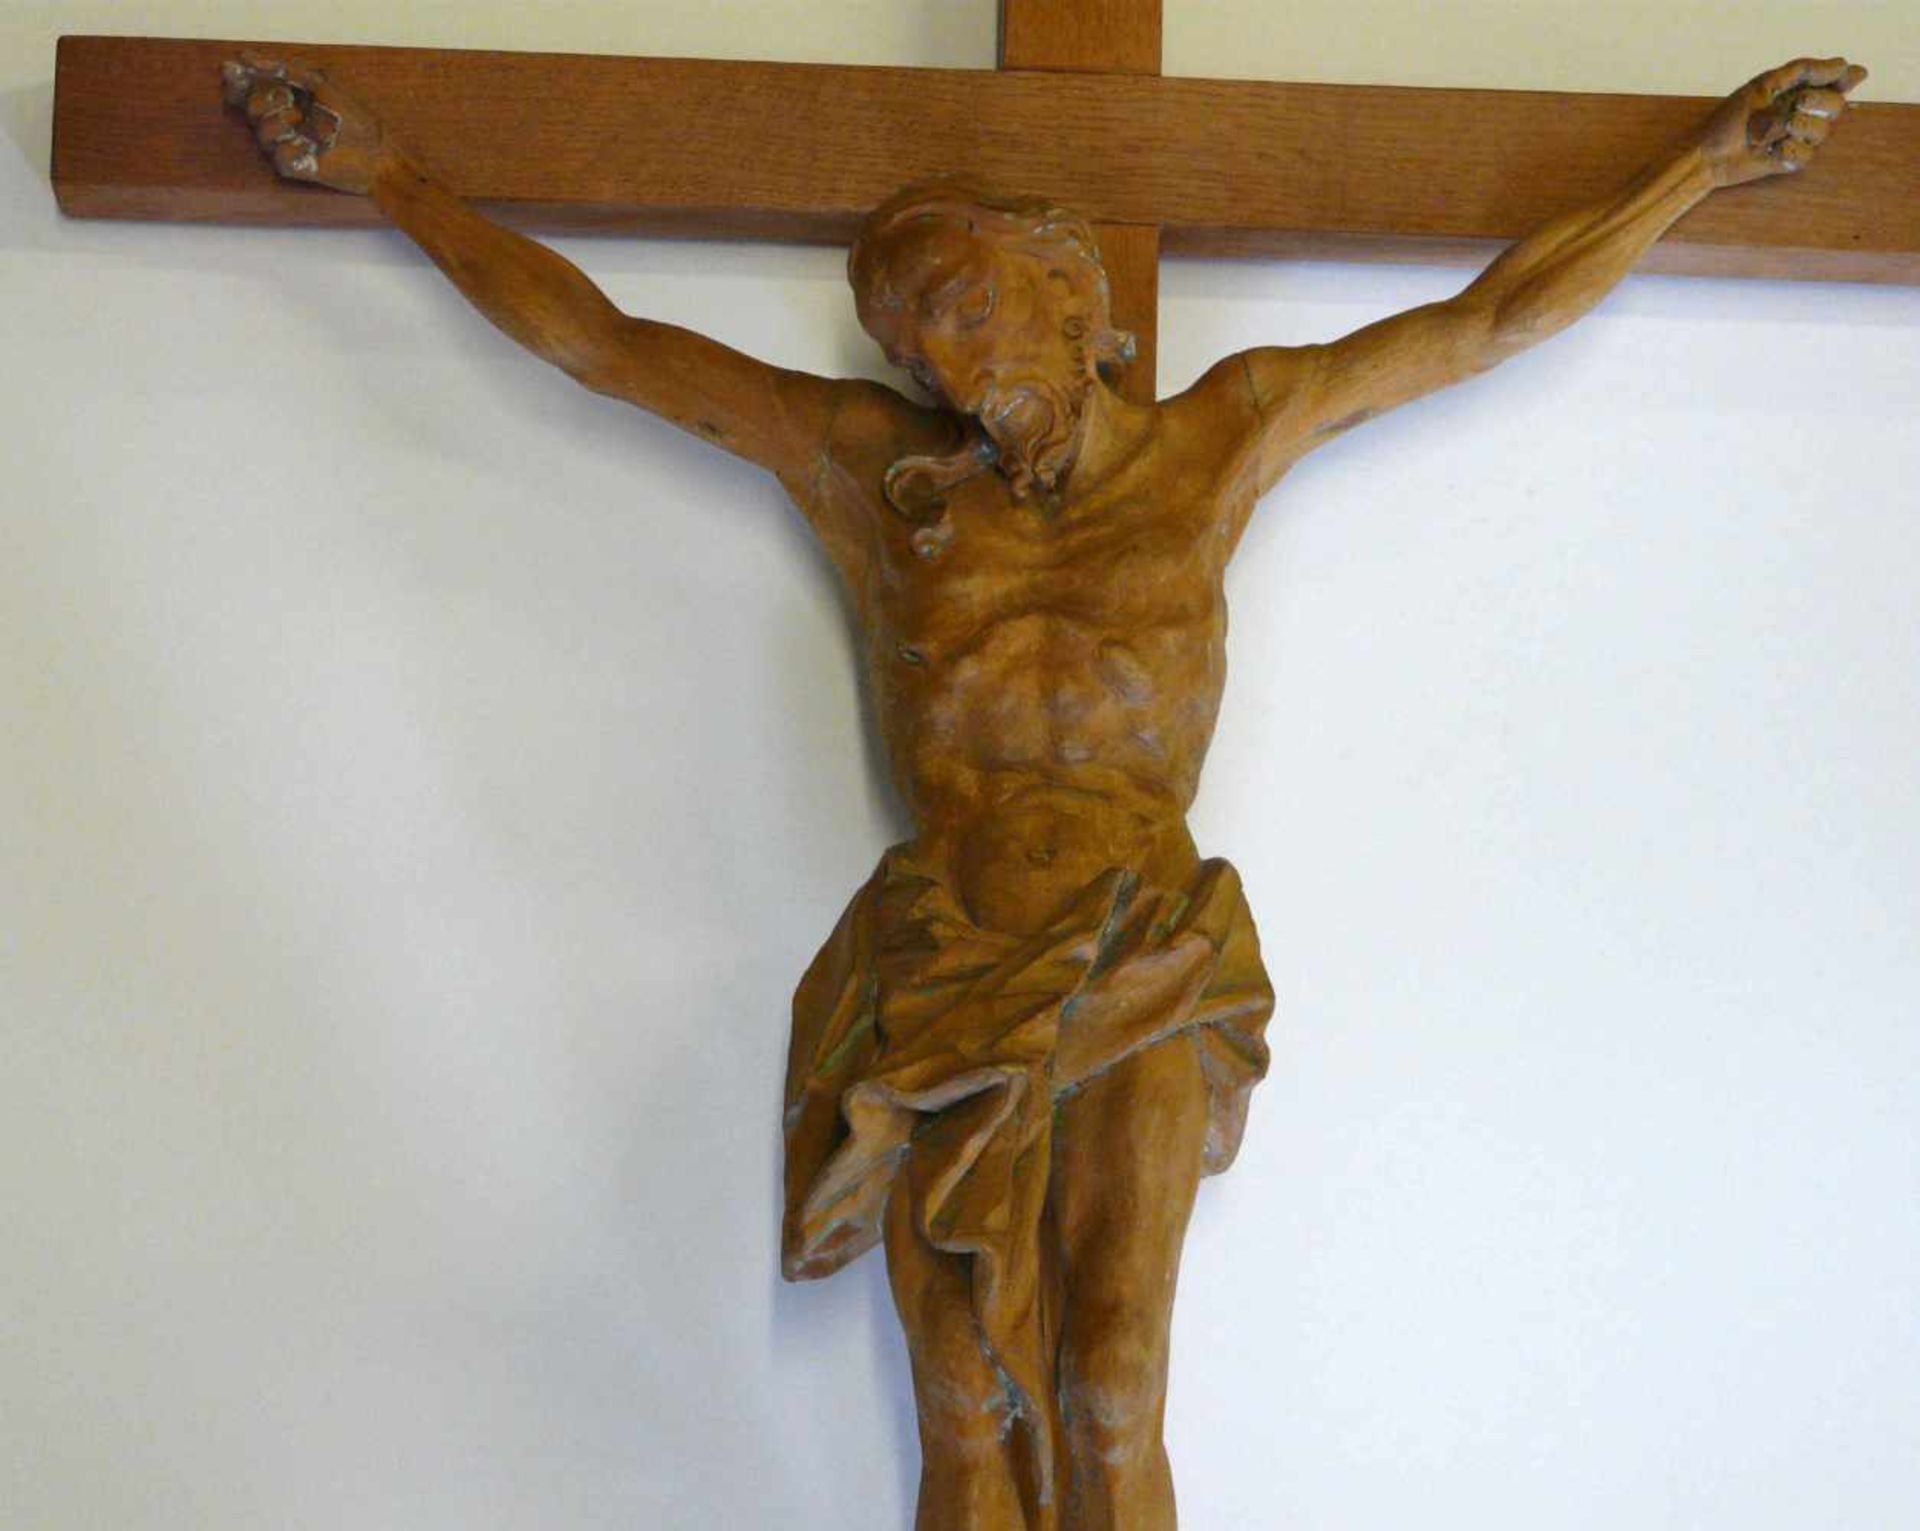 Kruzifix Christus-Corpus, Holz, geschnitzt, wohl 19. Jahrhundert, Kreuz ergänzt. Das ehemals - Bild 2 aus 2